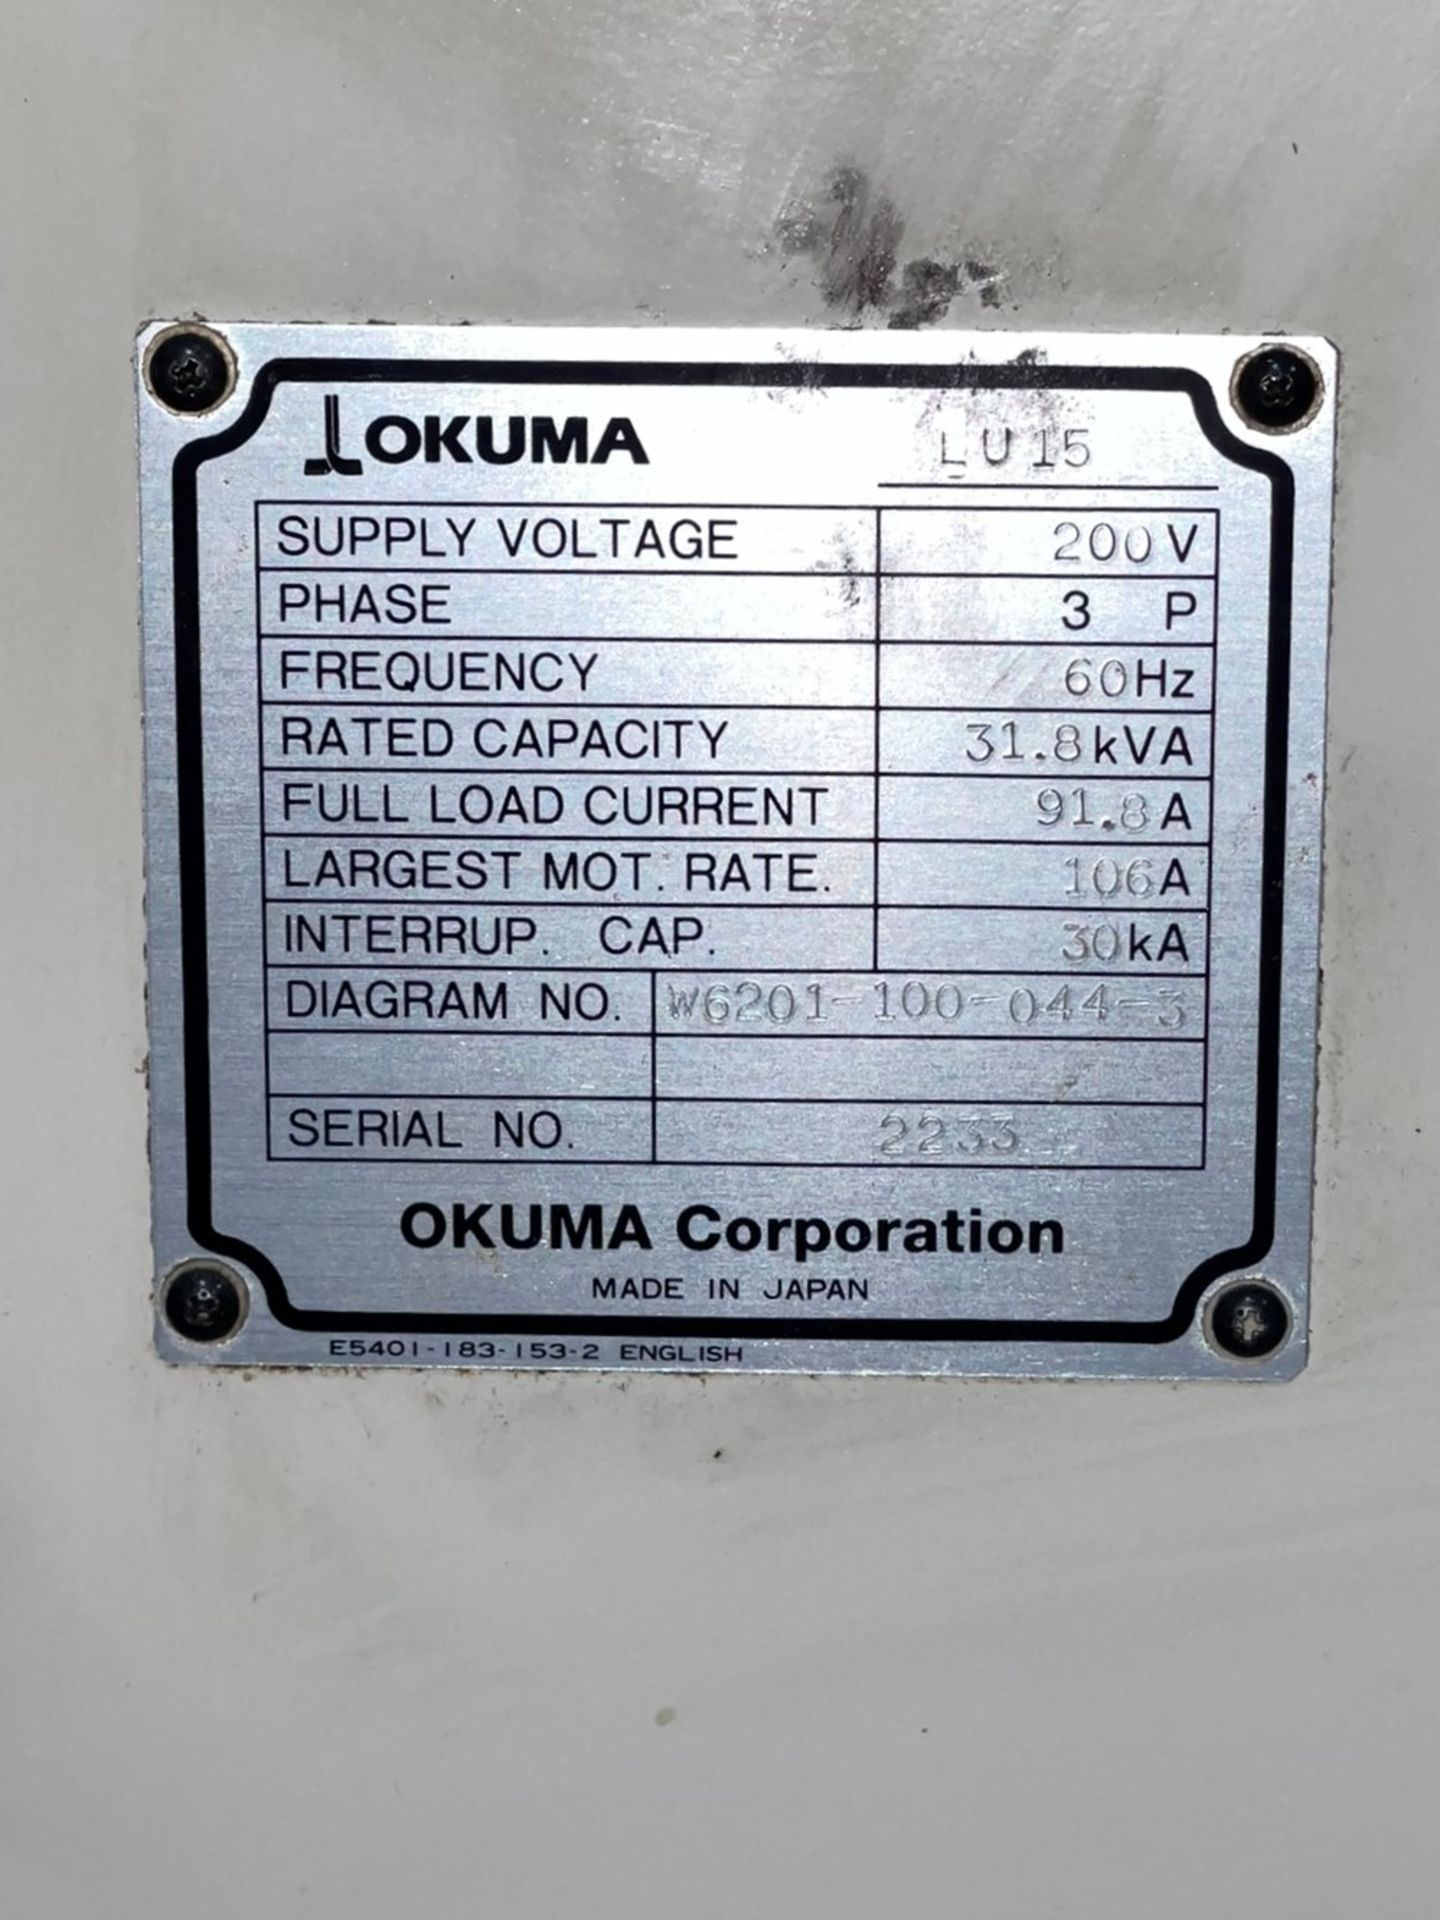 OKUMA Impact LU-15MY Twin-Turret CNC Turning Center with Live Milling, S/N 2233 - Image 13 of 13